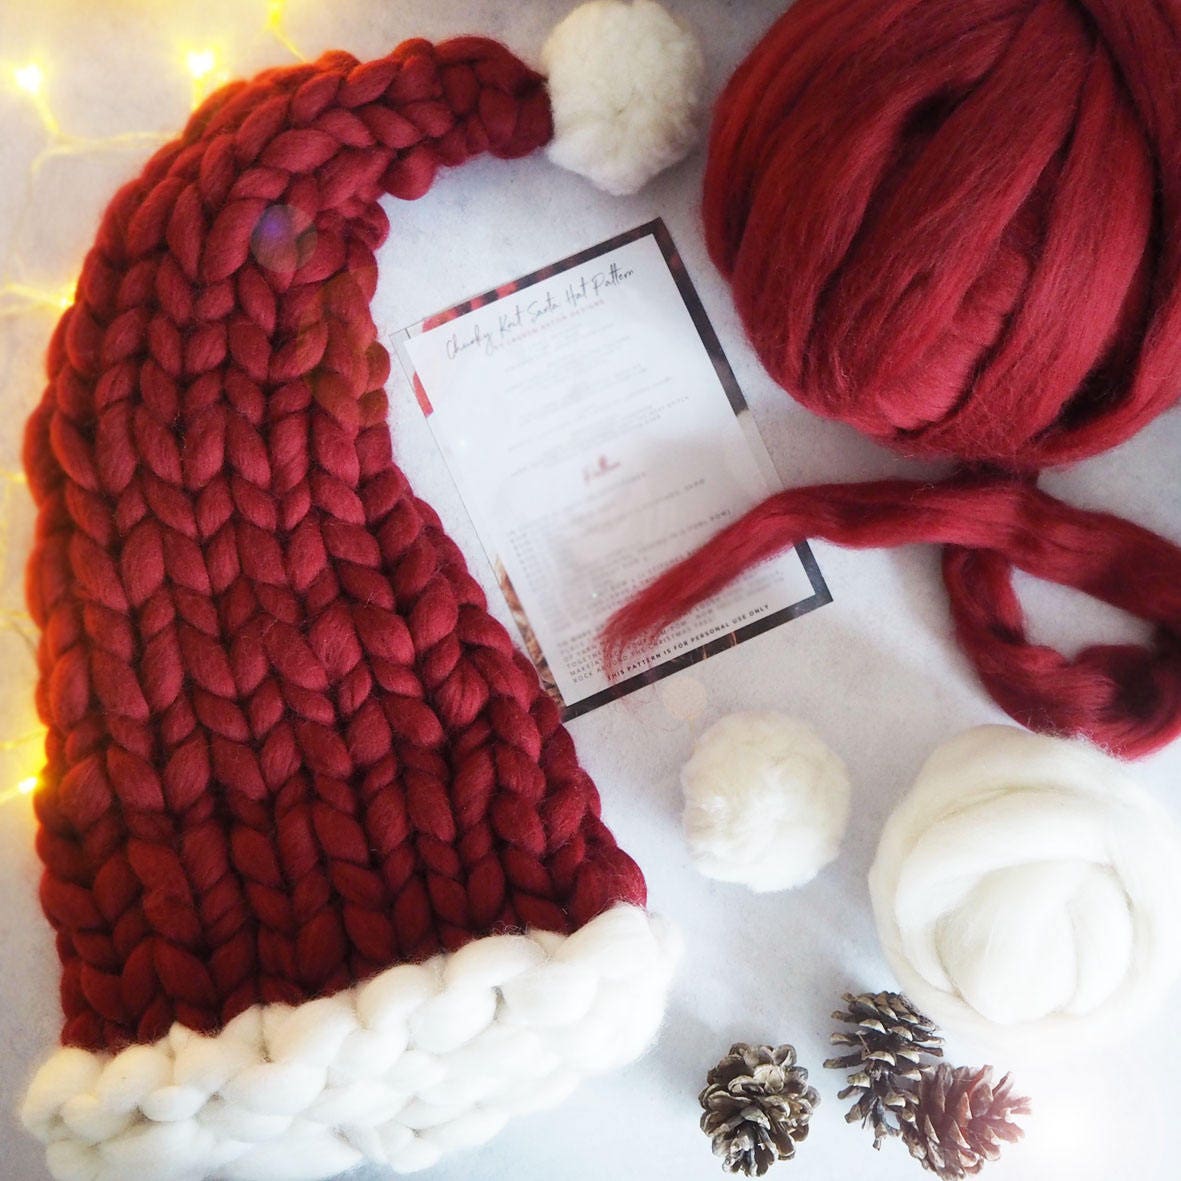 Beginner's Knitted Hat Kit - Choose Your Color - Expression Fiber Arts, Inc.